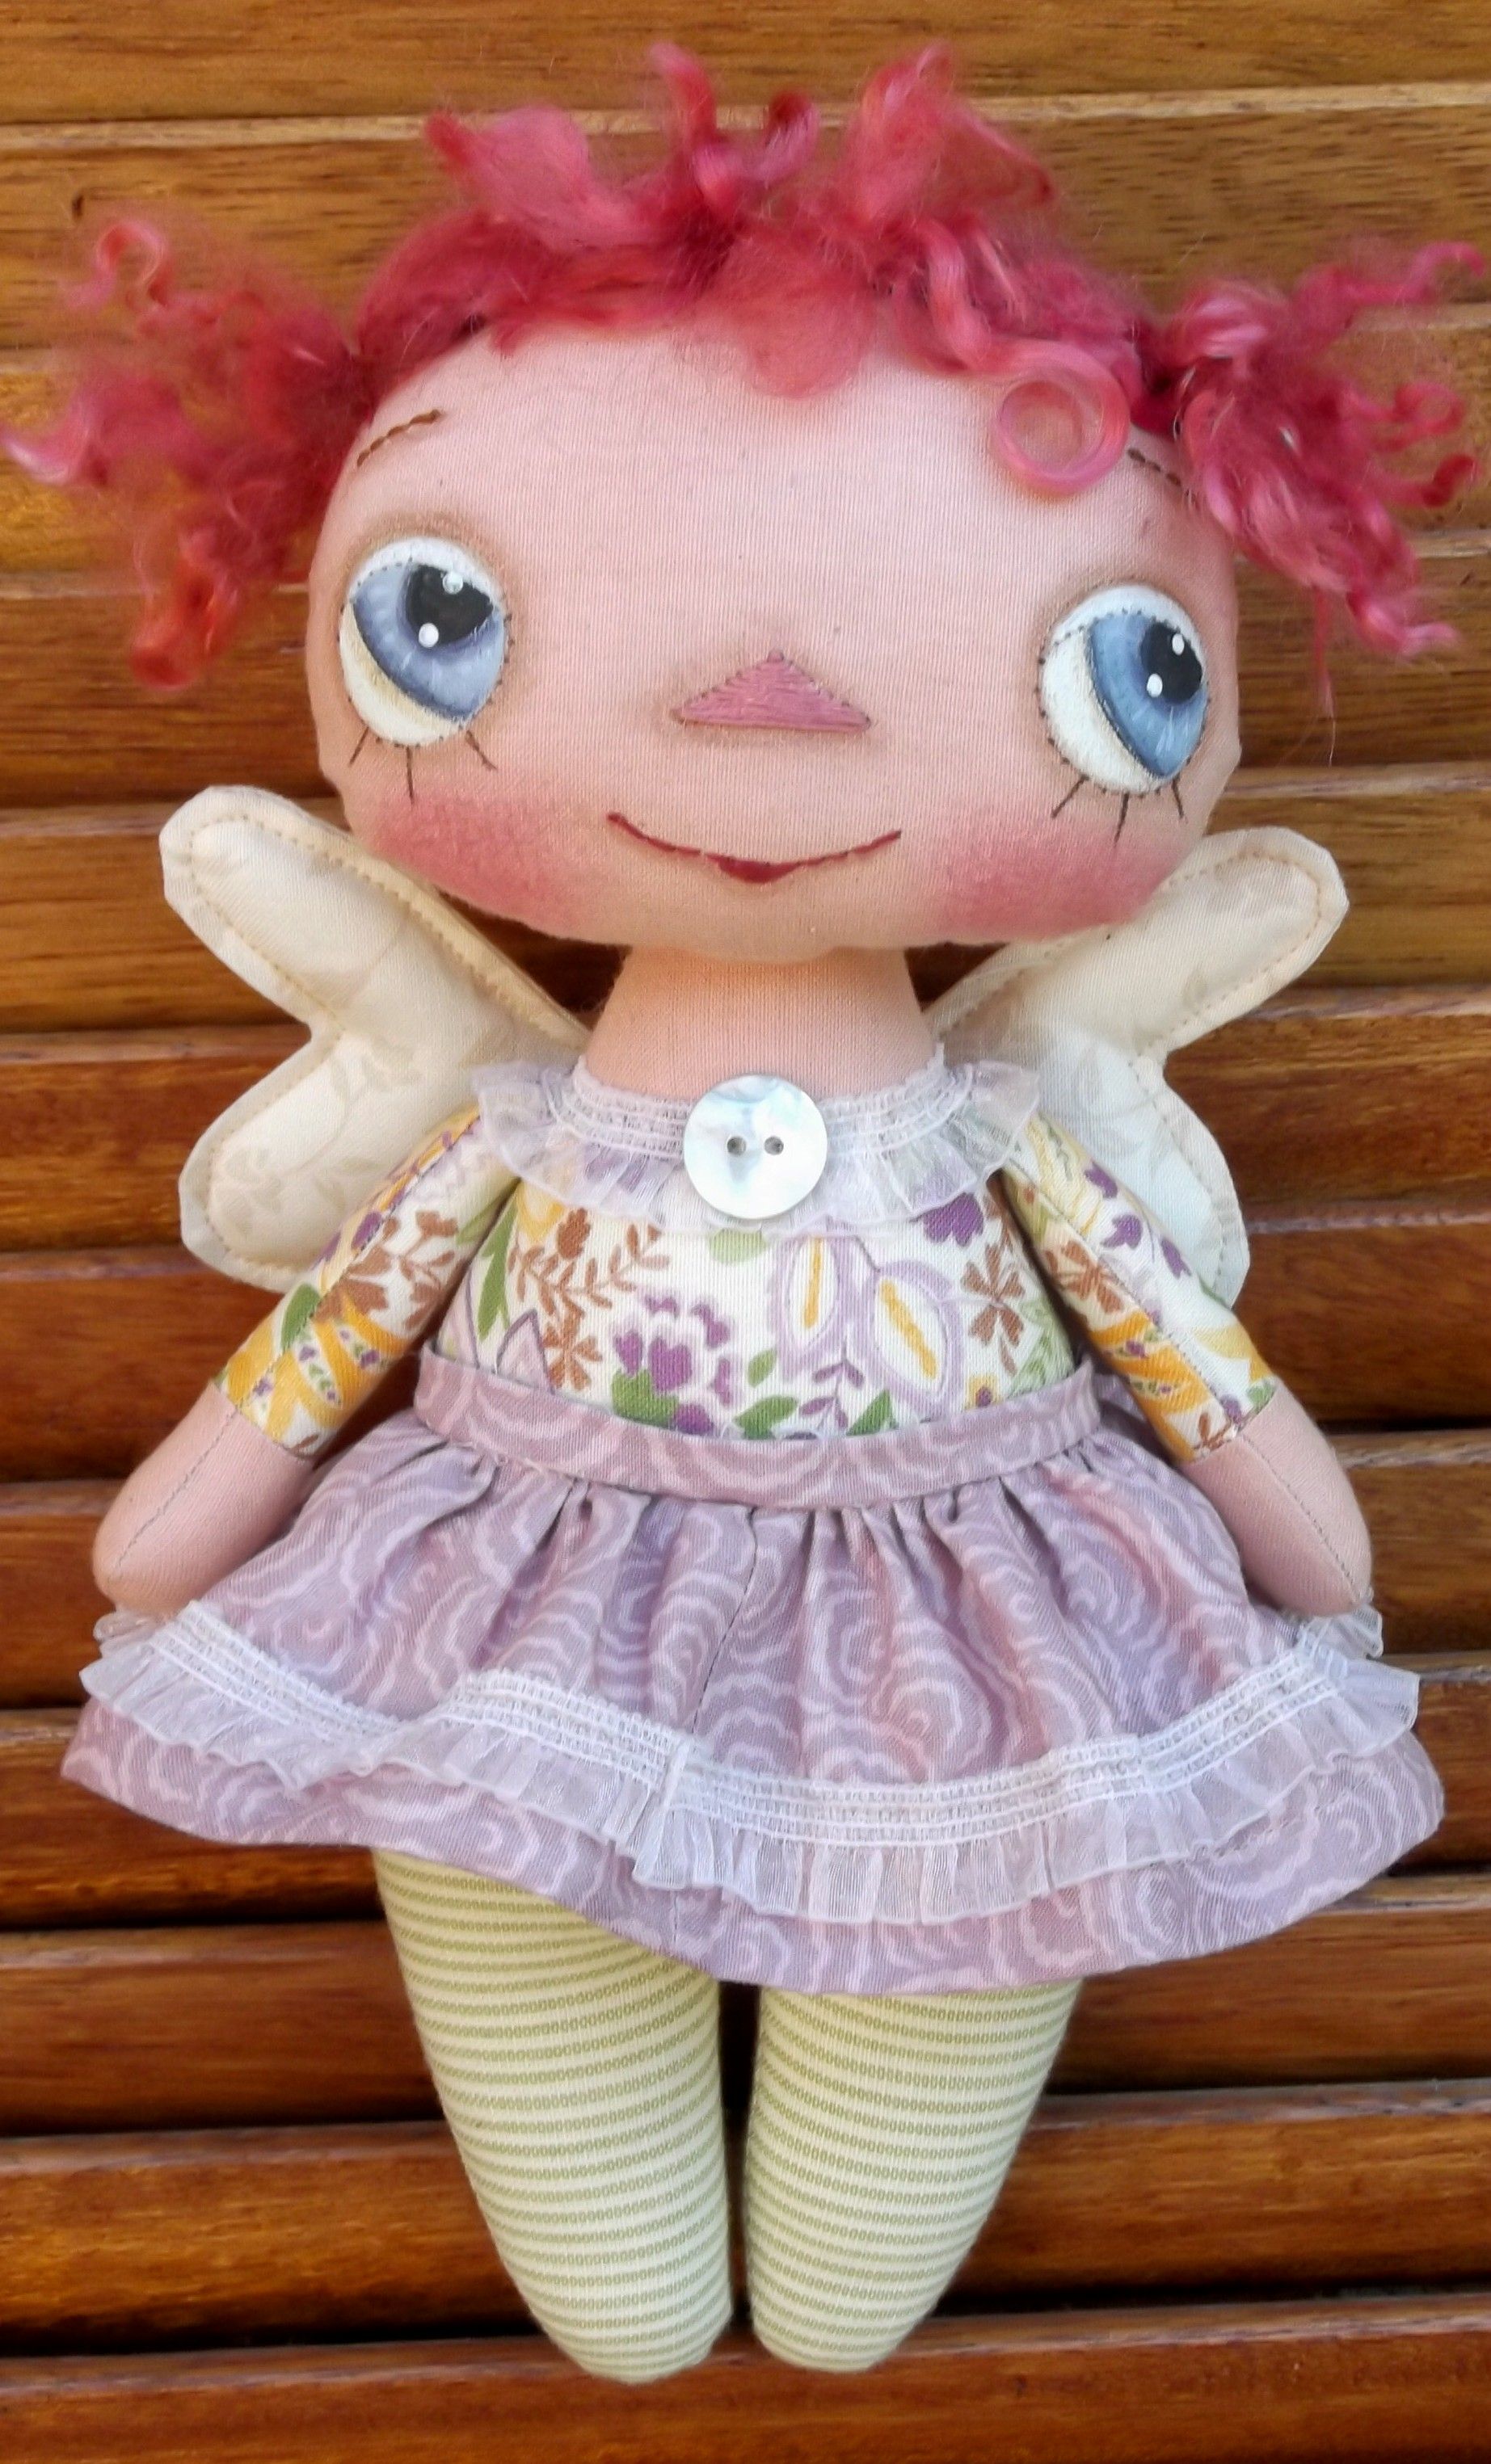 Cutie by Annie Smith | Cloth Dolls 2 | Pinterest | Annie smith ...